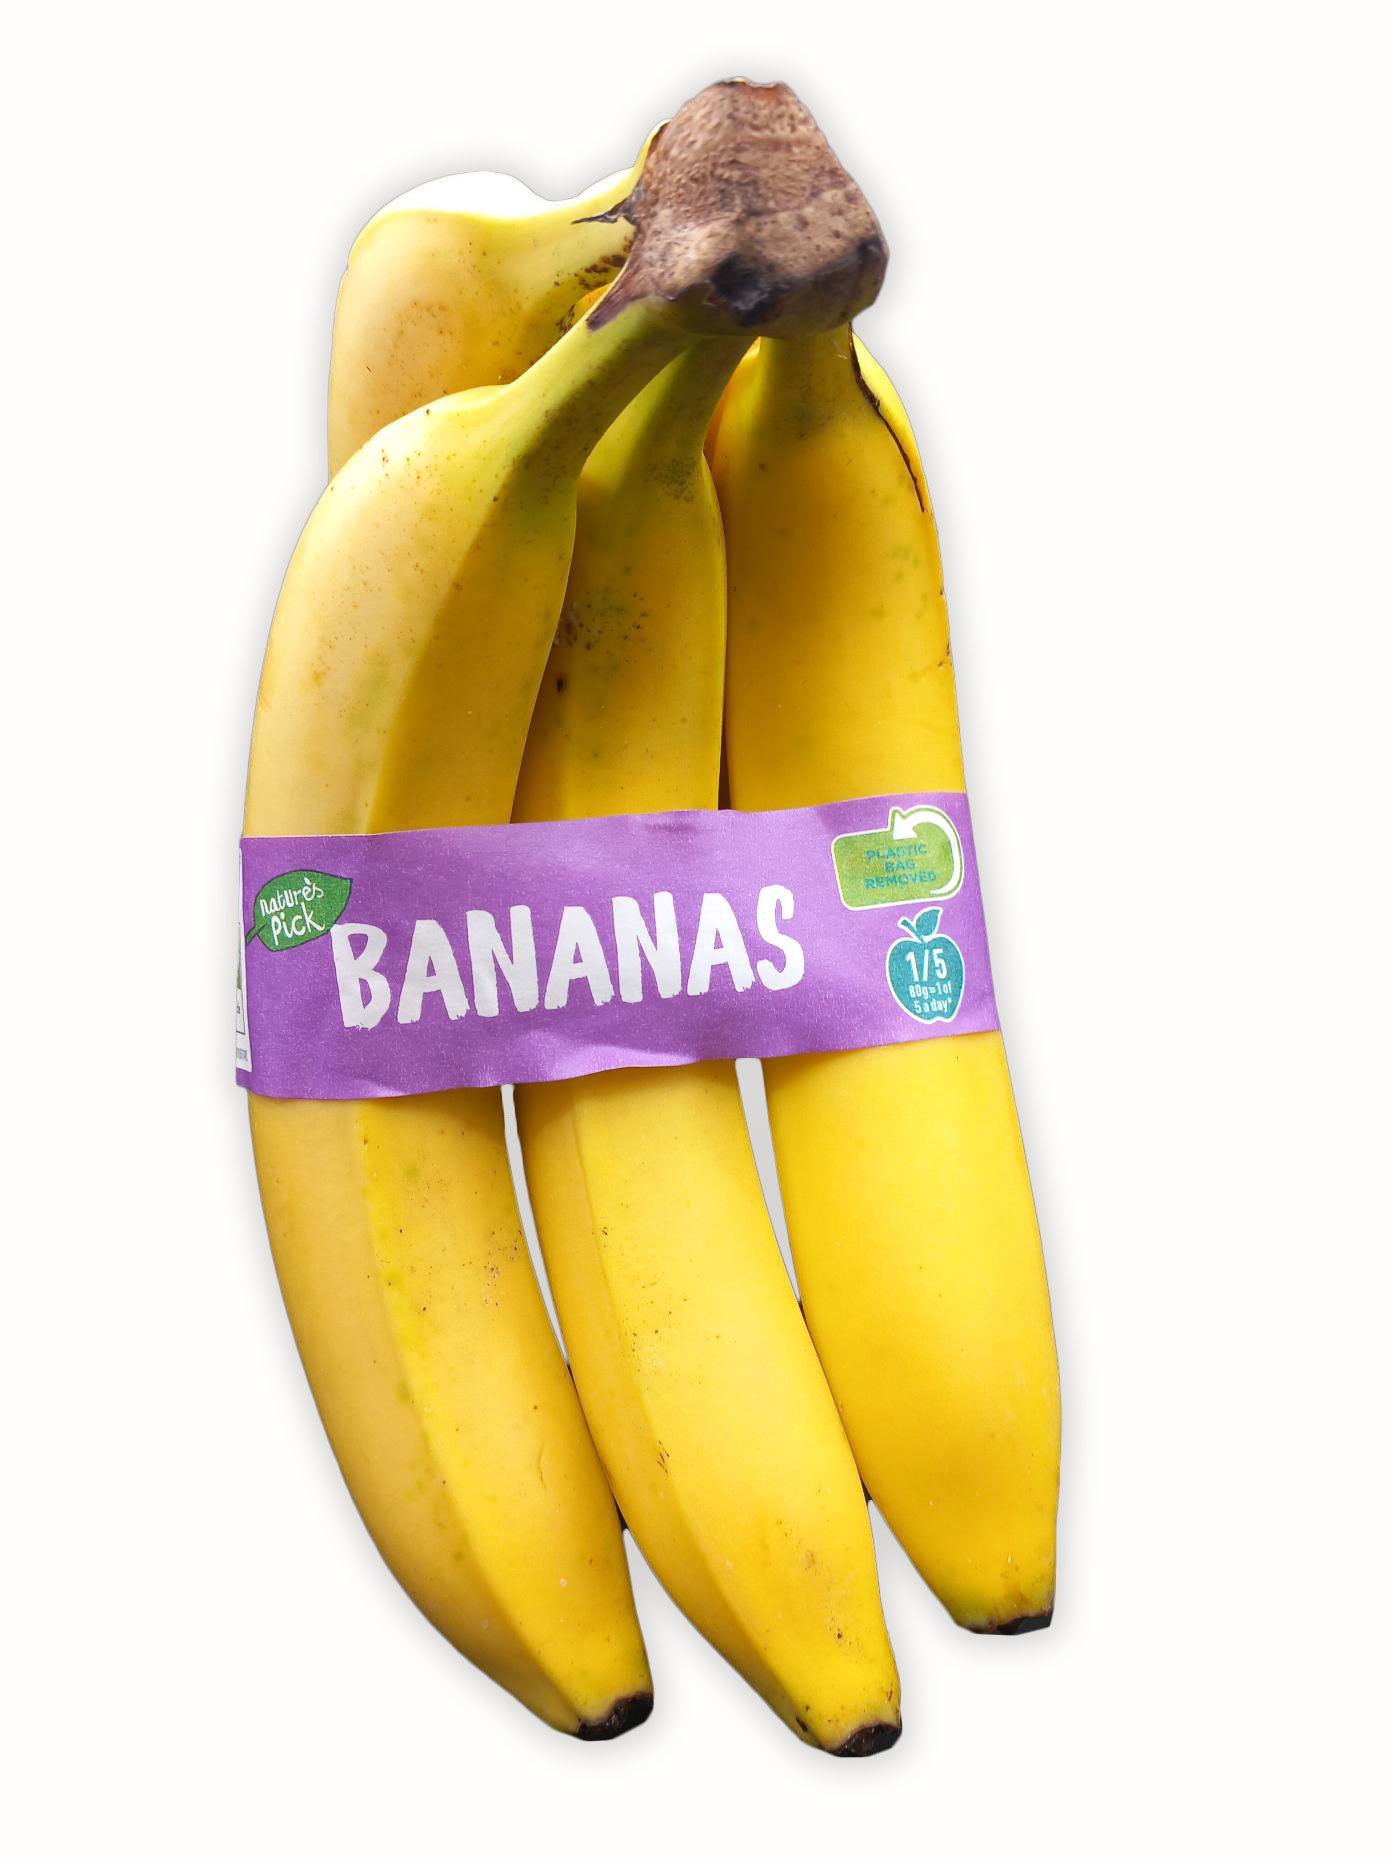 Aldi trials plastic-free packaging for bananas